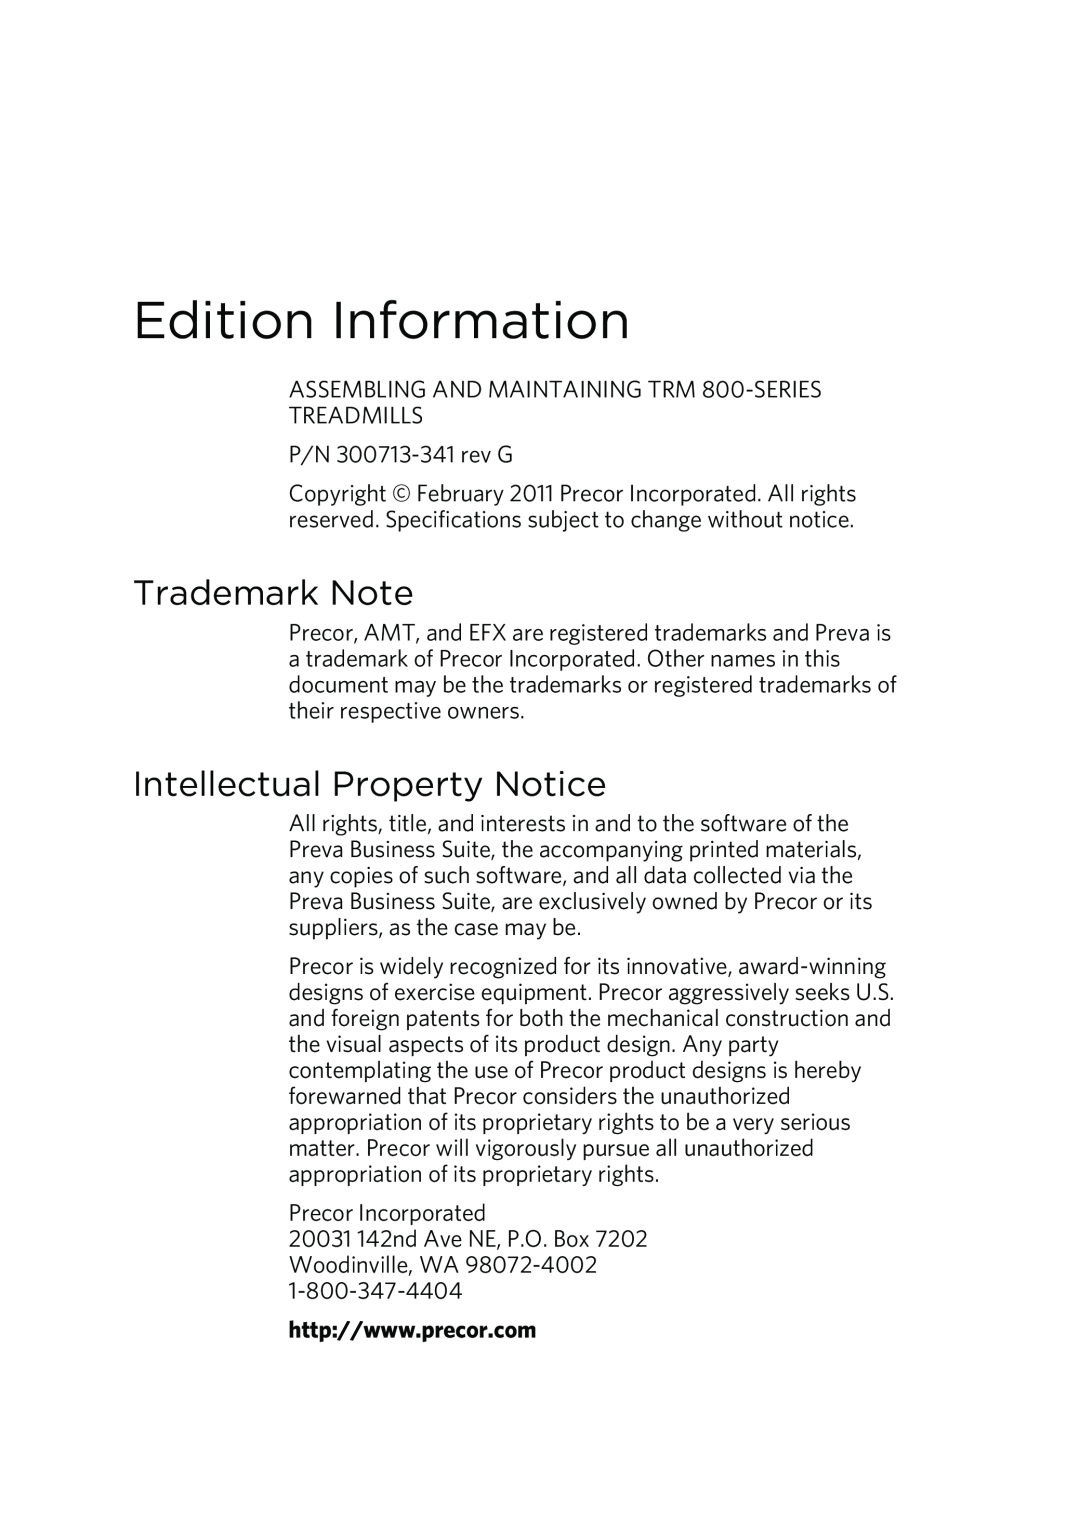 Precor P80 manual Edition Information, Trademark Note, Intellectual Property Notice, P/N 300713-341rev G 